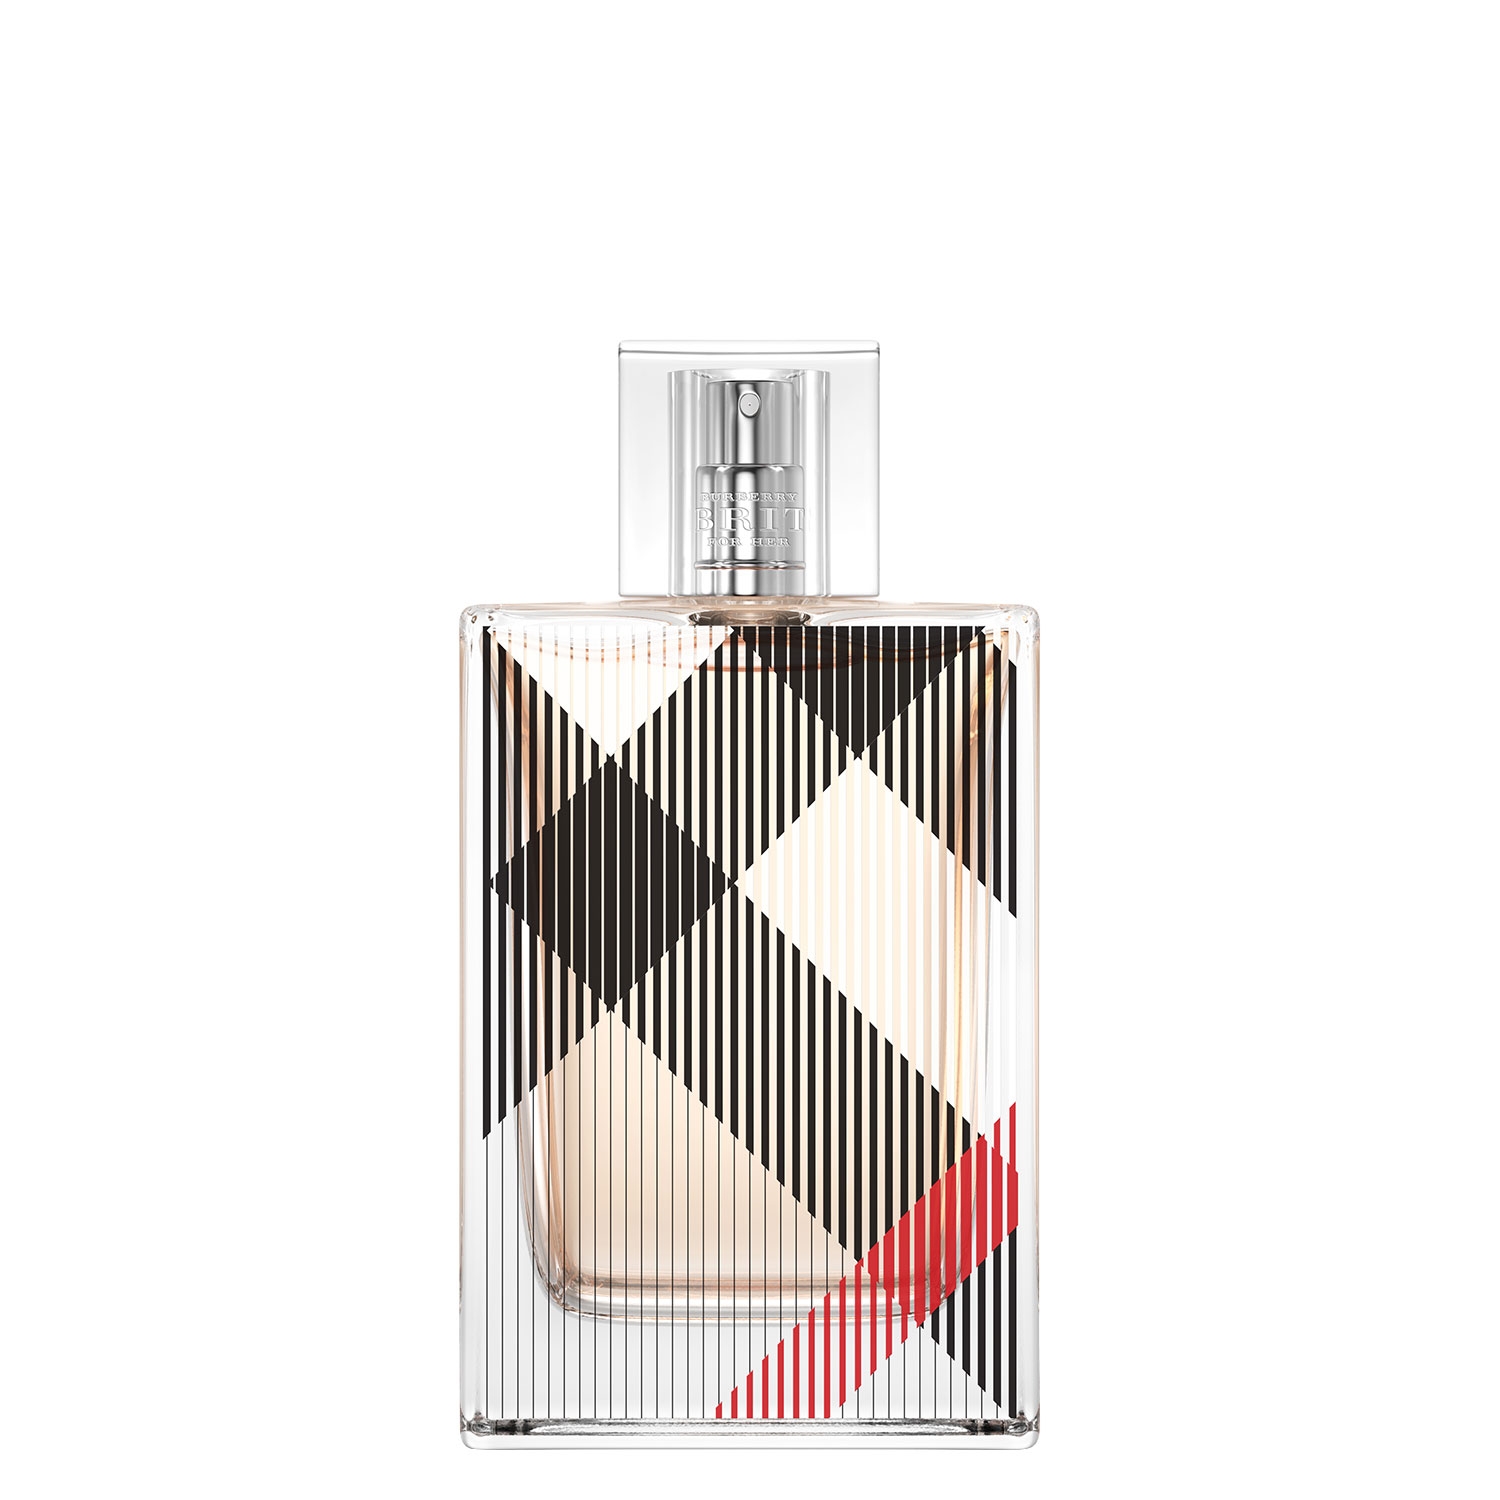 Produktbild von Burberry Brit - Eau de Parfum for Her